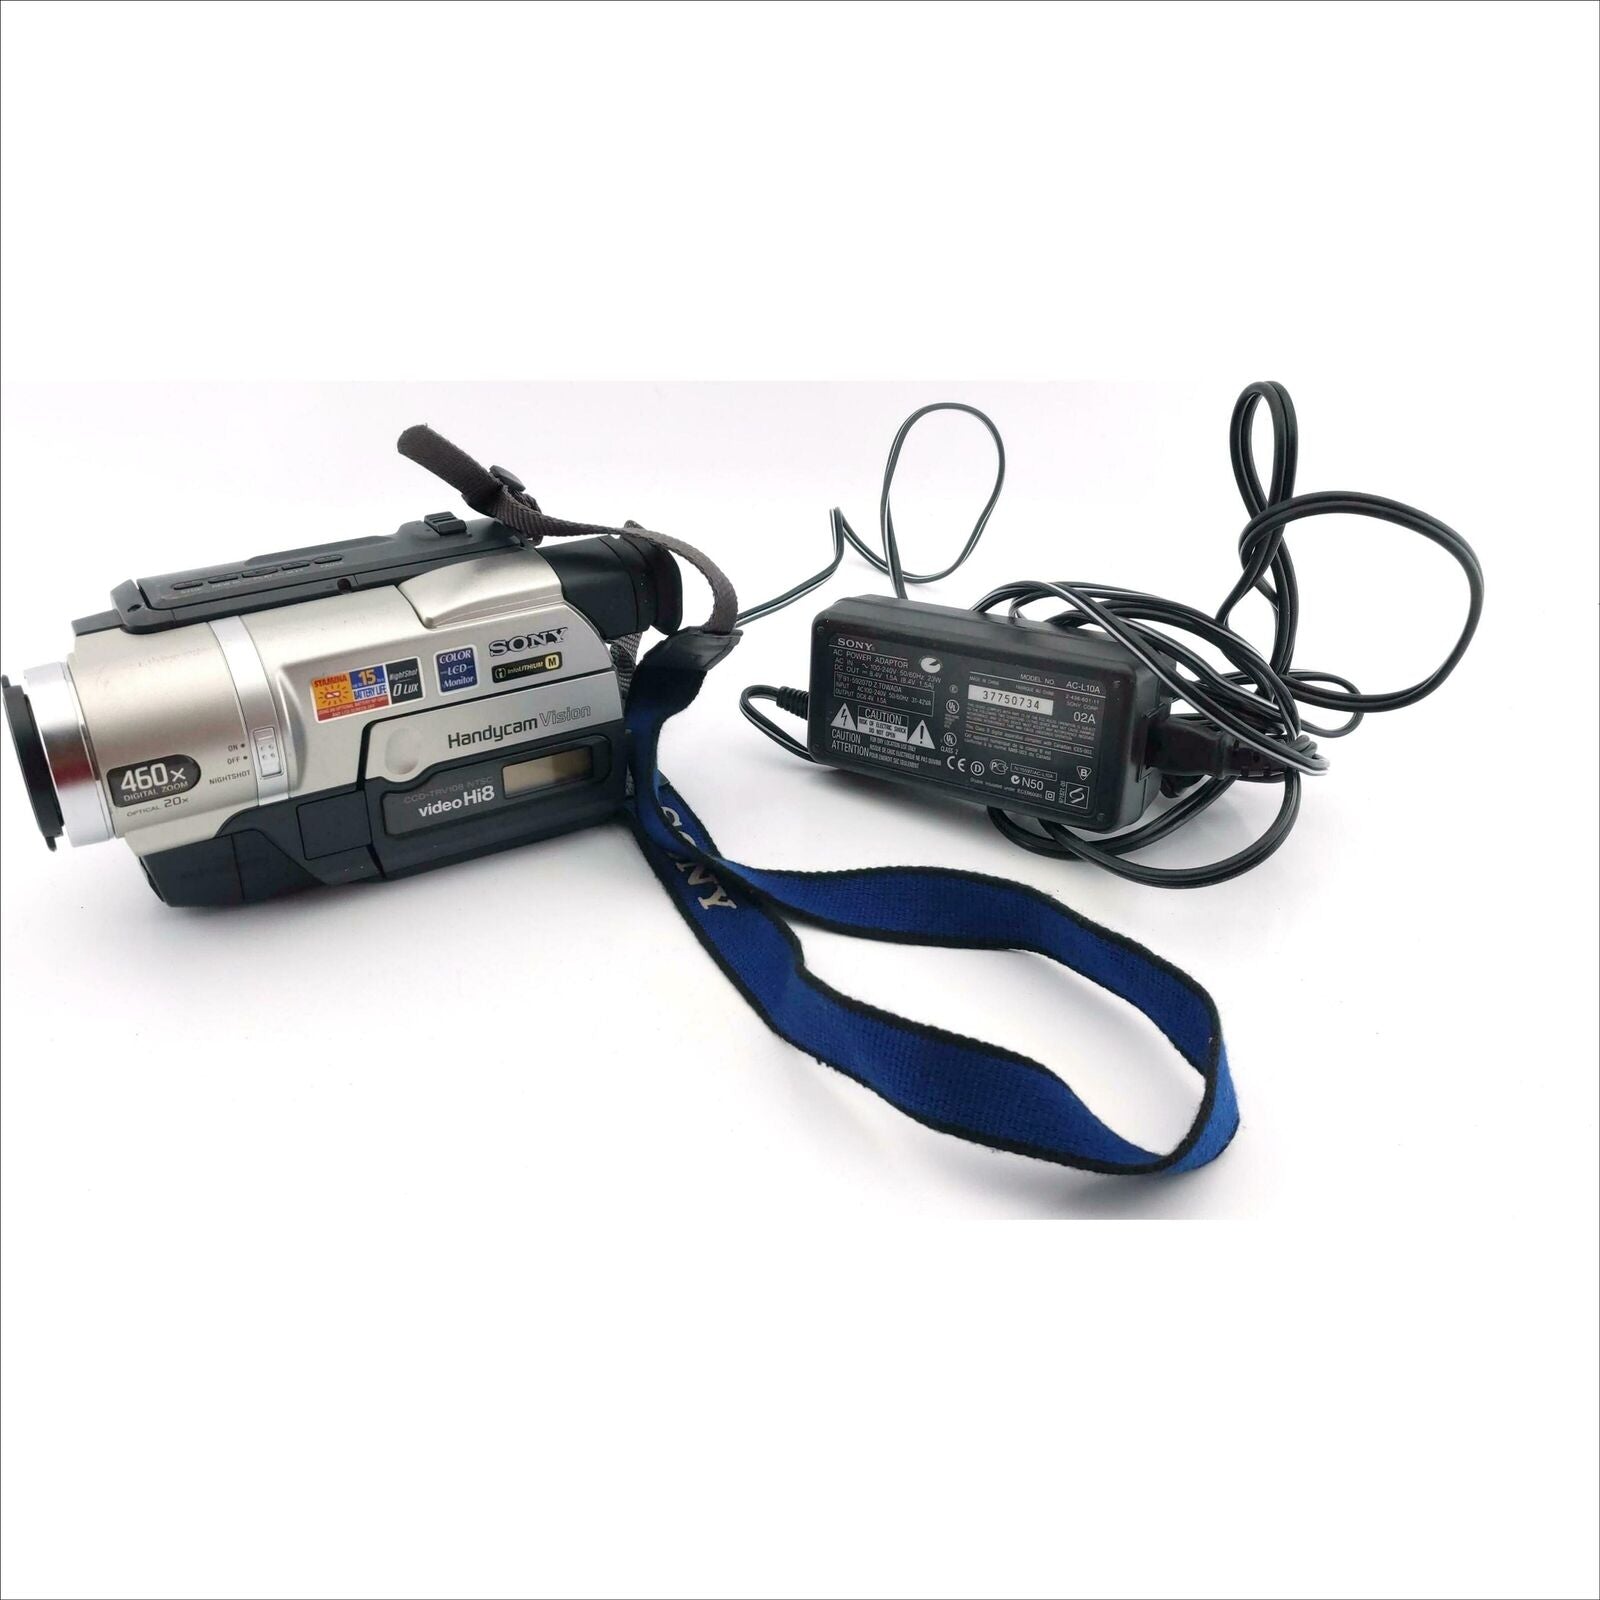 Sony CCD-TRV308 Hi8 heavy duty NTSC camcorder plays 8mm Hi8 analog 